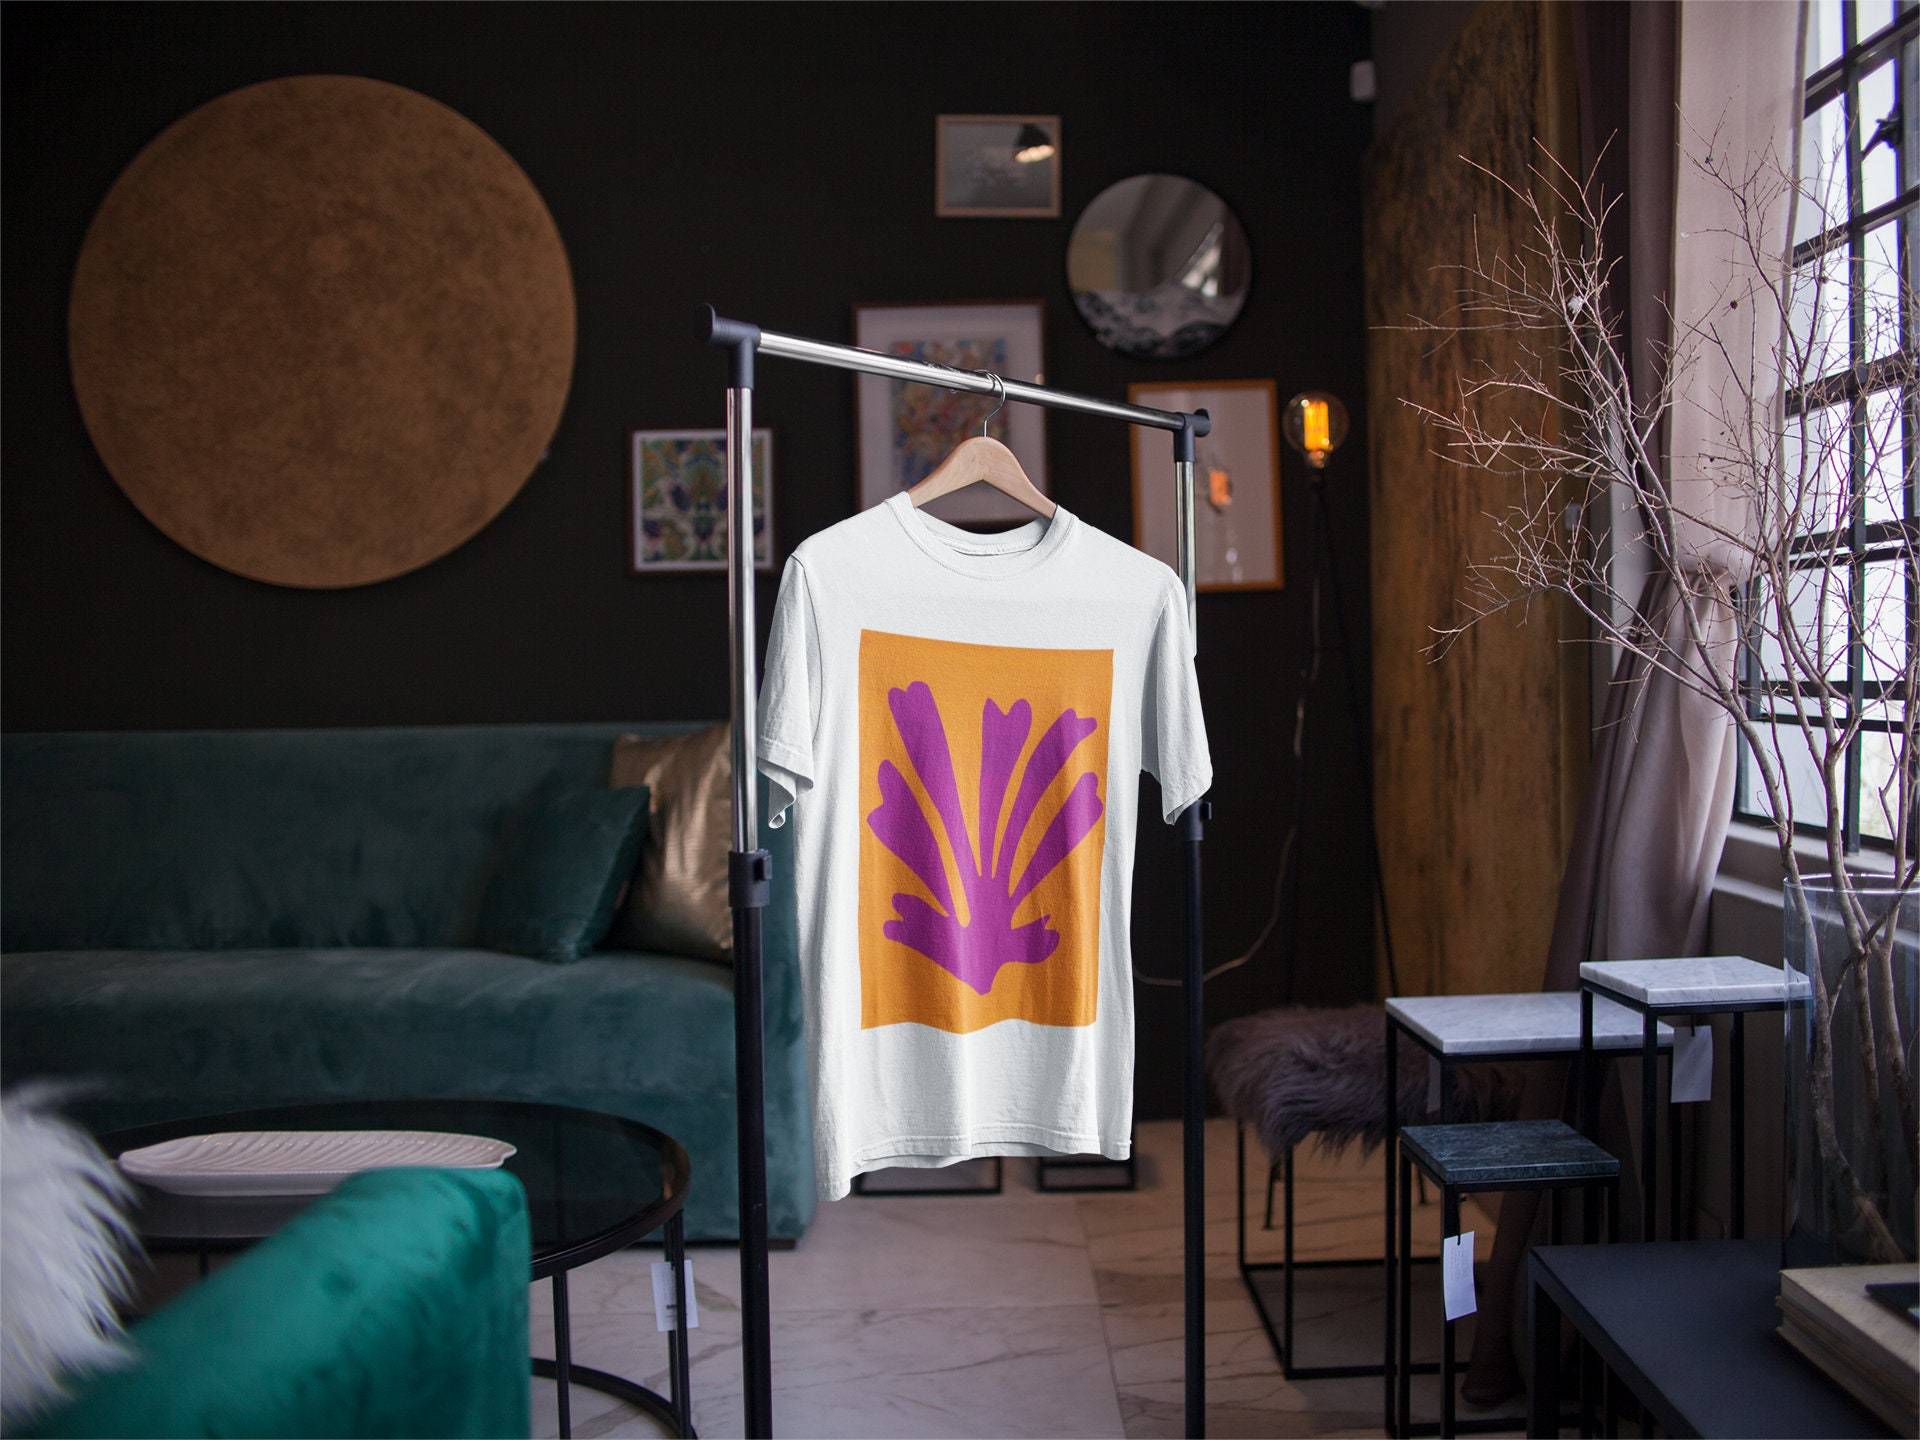 HENRI MATISSE - Violet Leaf T-Shirt - Pathos Studio -